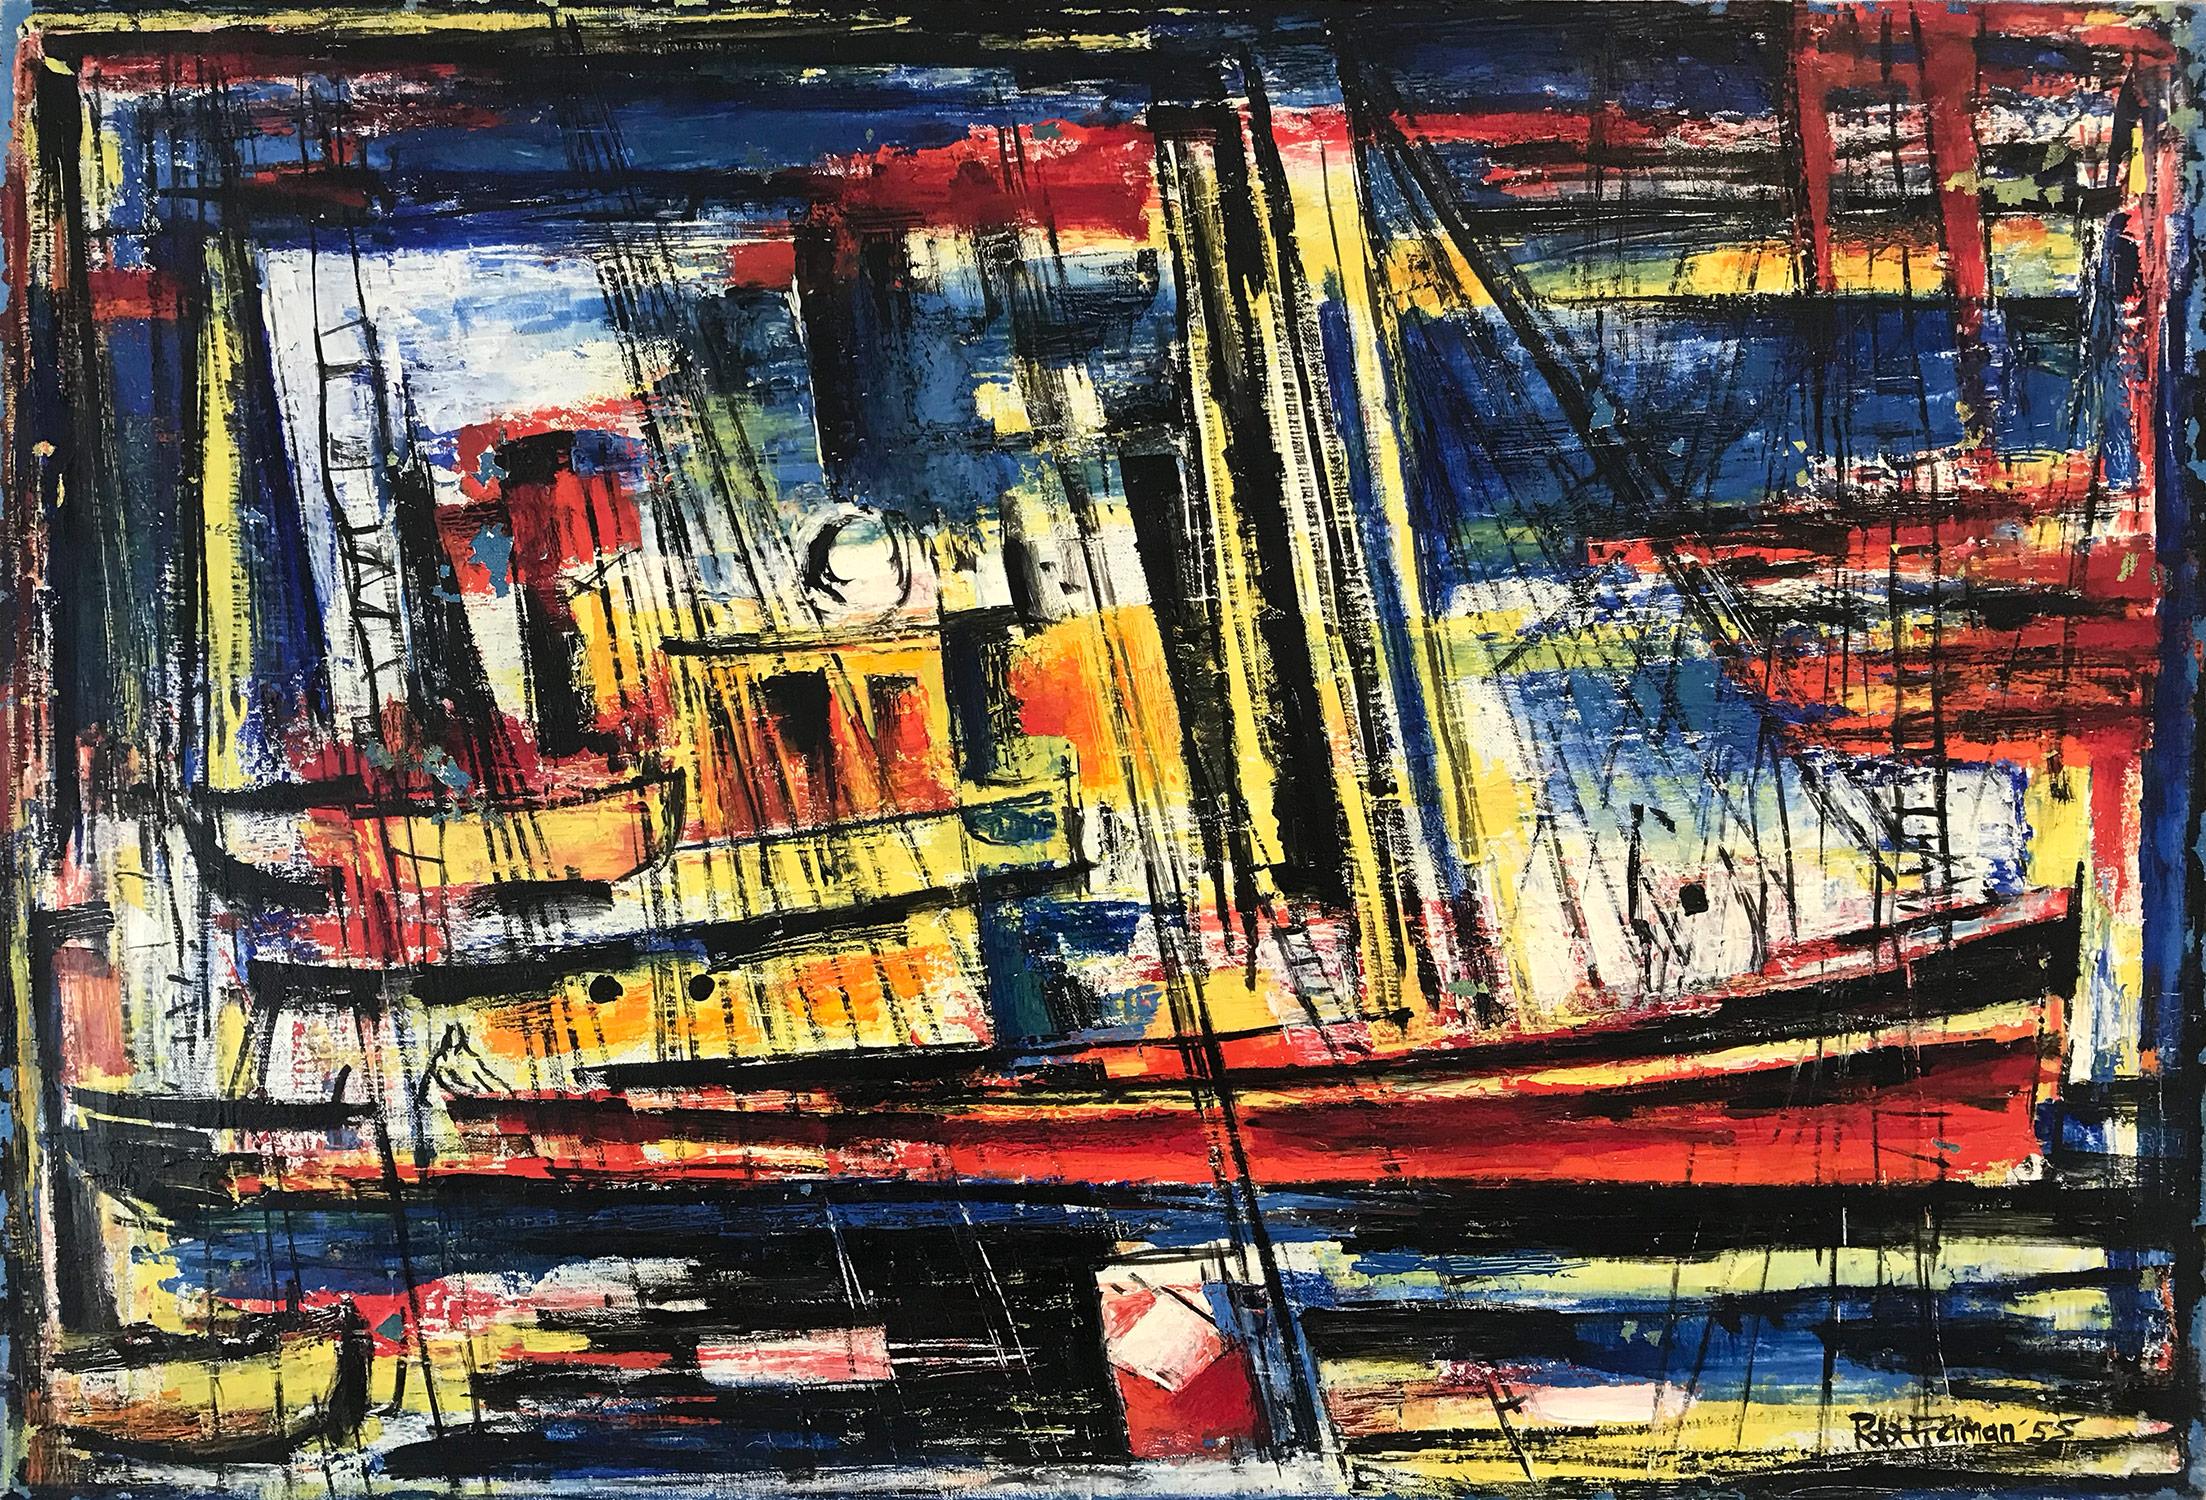 "The Freighter" Mid Century Ölgemälde auf Leinwand Abstrakte Marina mit Booten